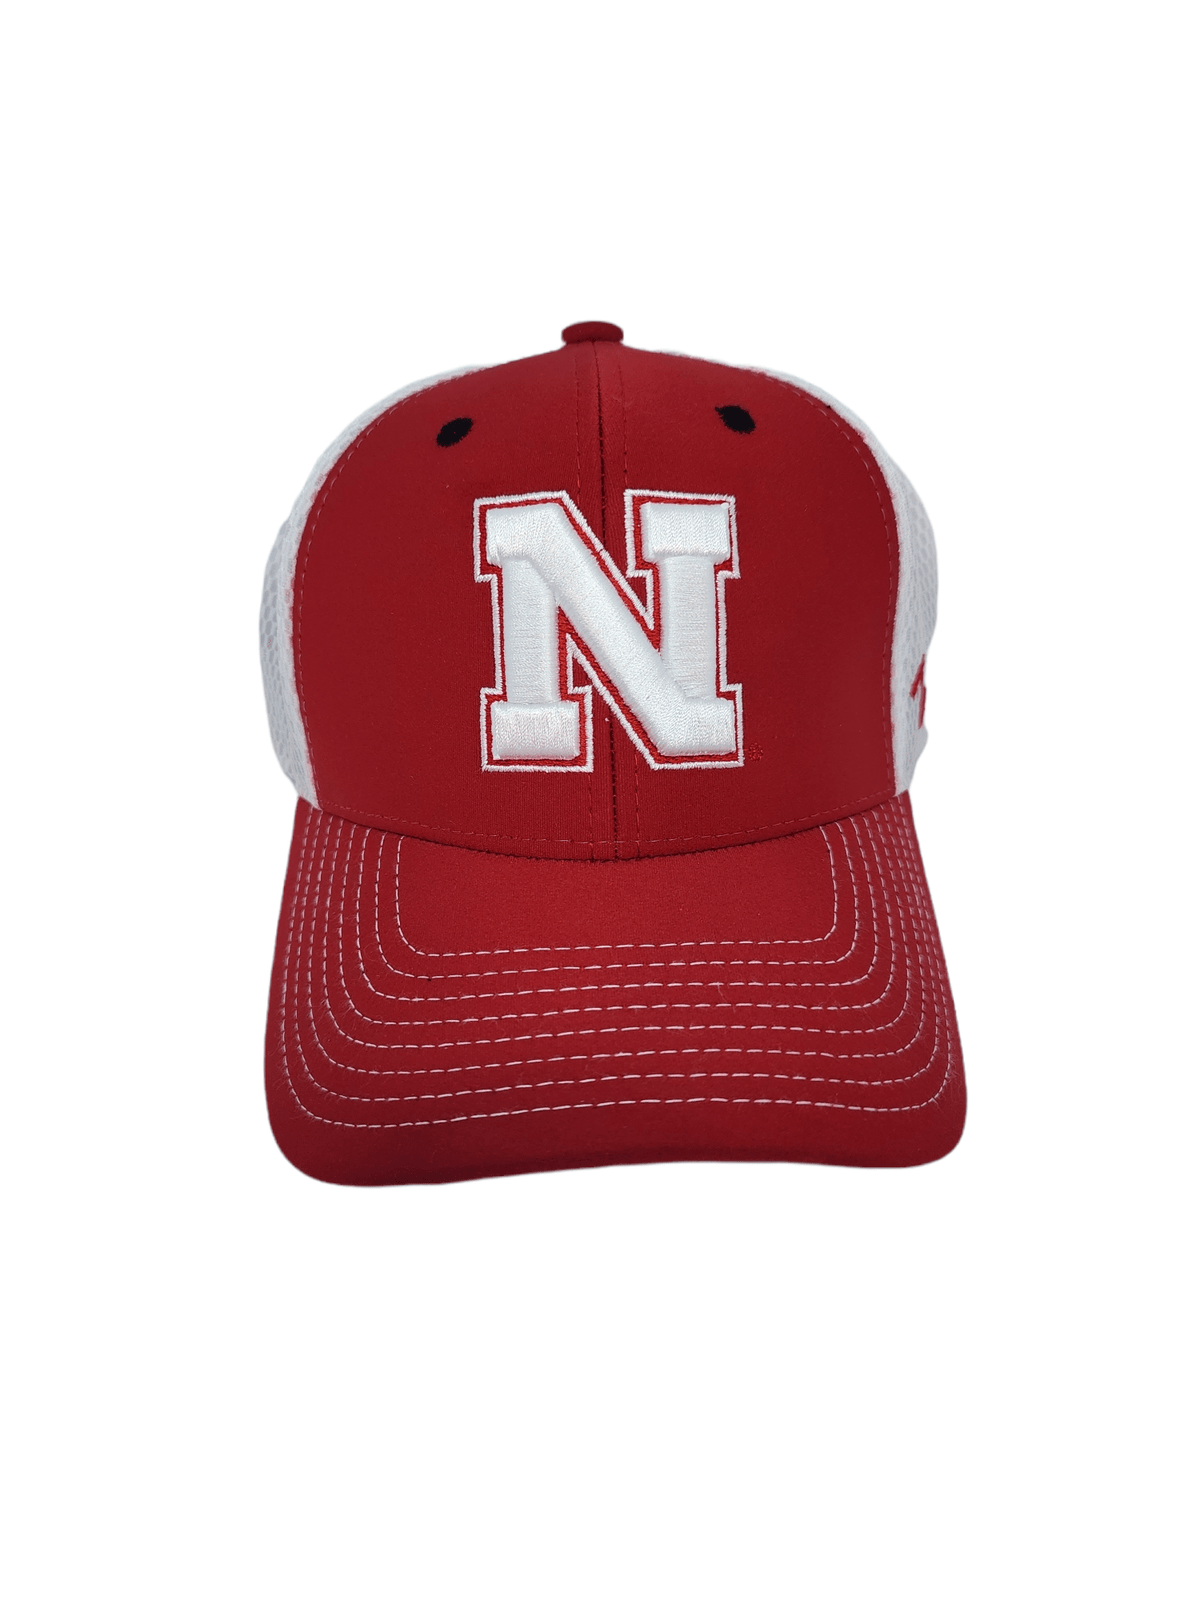 Zephyr Hats Nebraska Cornhuskers Mini-Camp Hat